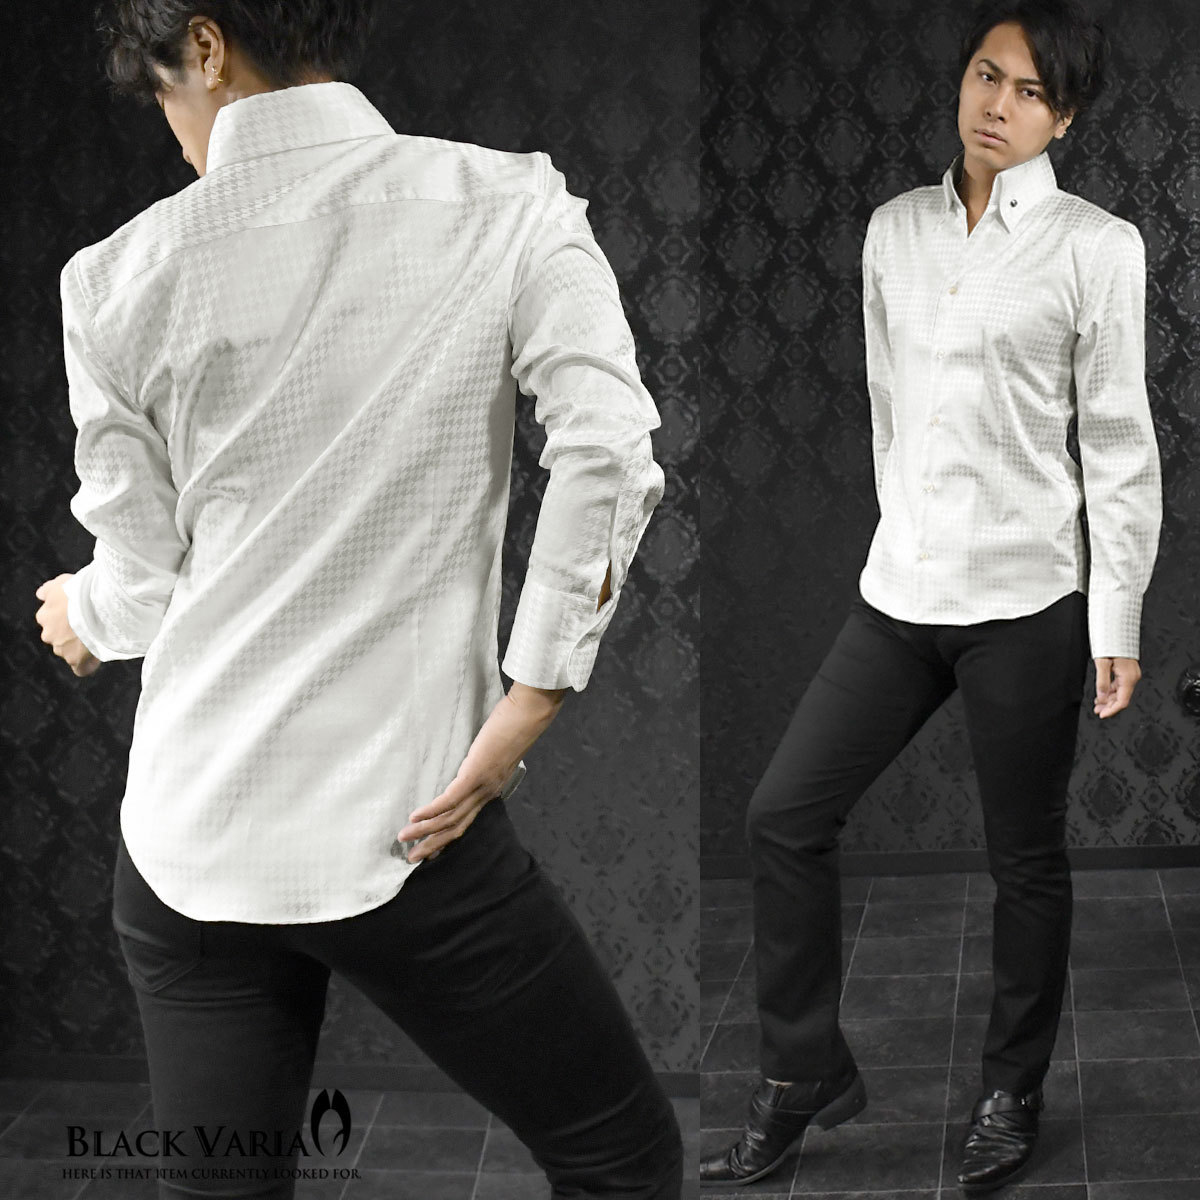 191255-whS BLACK VARIA ジャガード千鳥柄 スキッパー スワロフスキーBD ドレスシャツ スリム メンズ(クリスタル釦・ホワイト白) M_襟元ボタンはクリスタル釦です